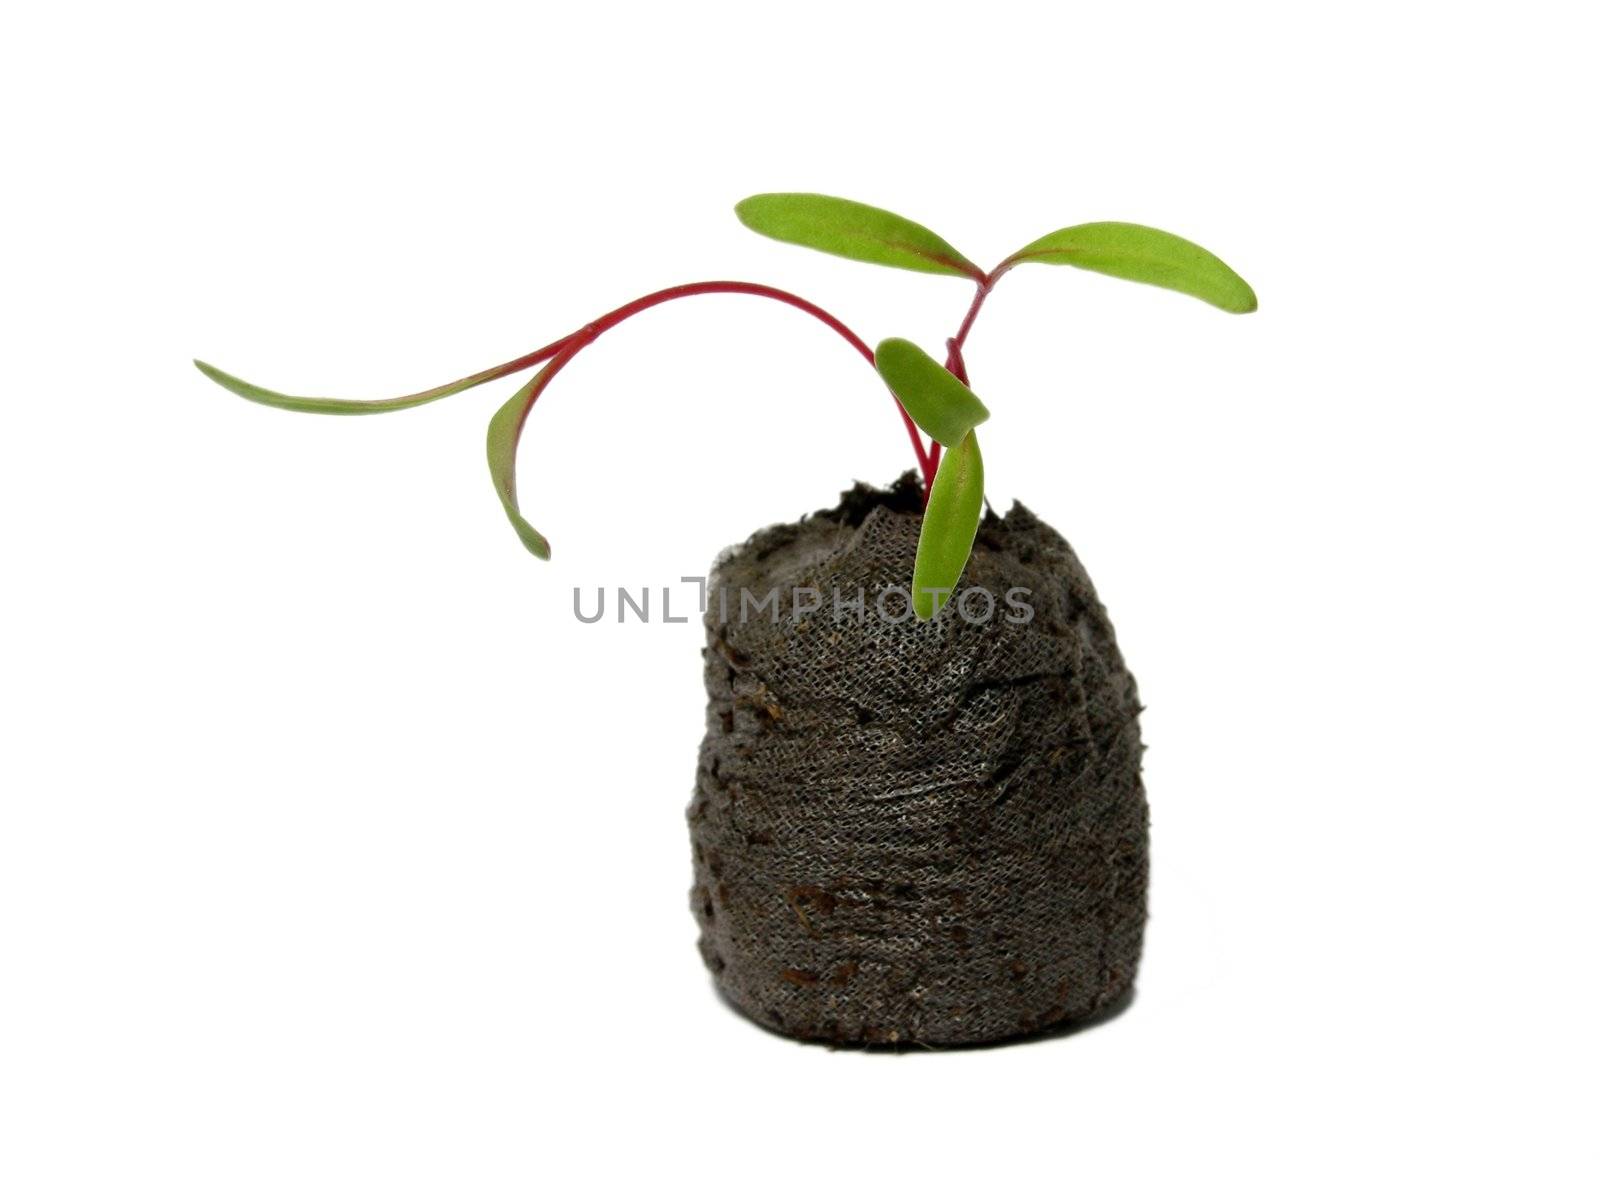 Seedling in a peat pot - mangold (Beta vulgaris)